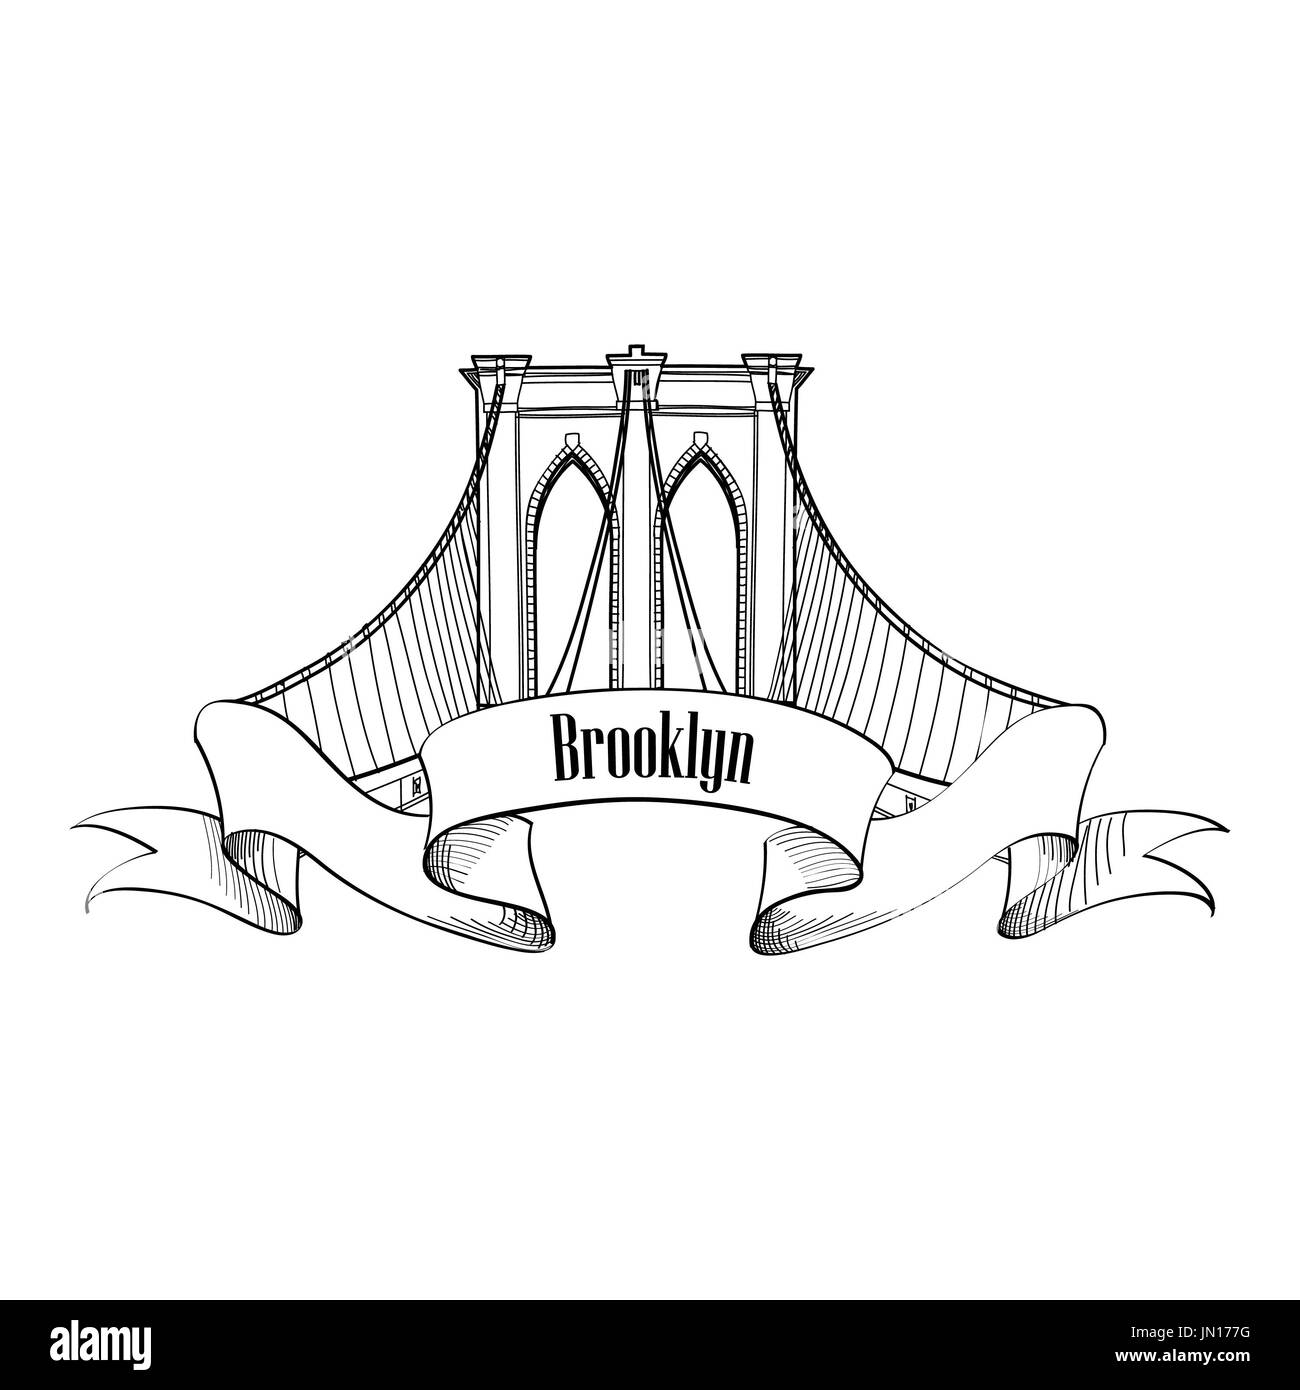 New York Brooklyn Bridge Symbole. La conception de l'étiquette Banque D'Images